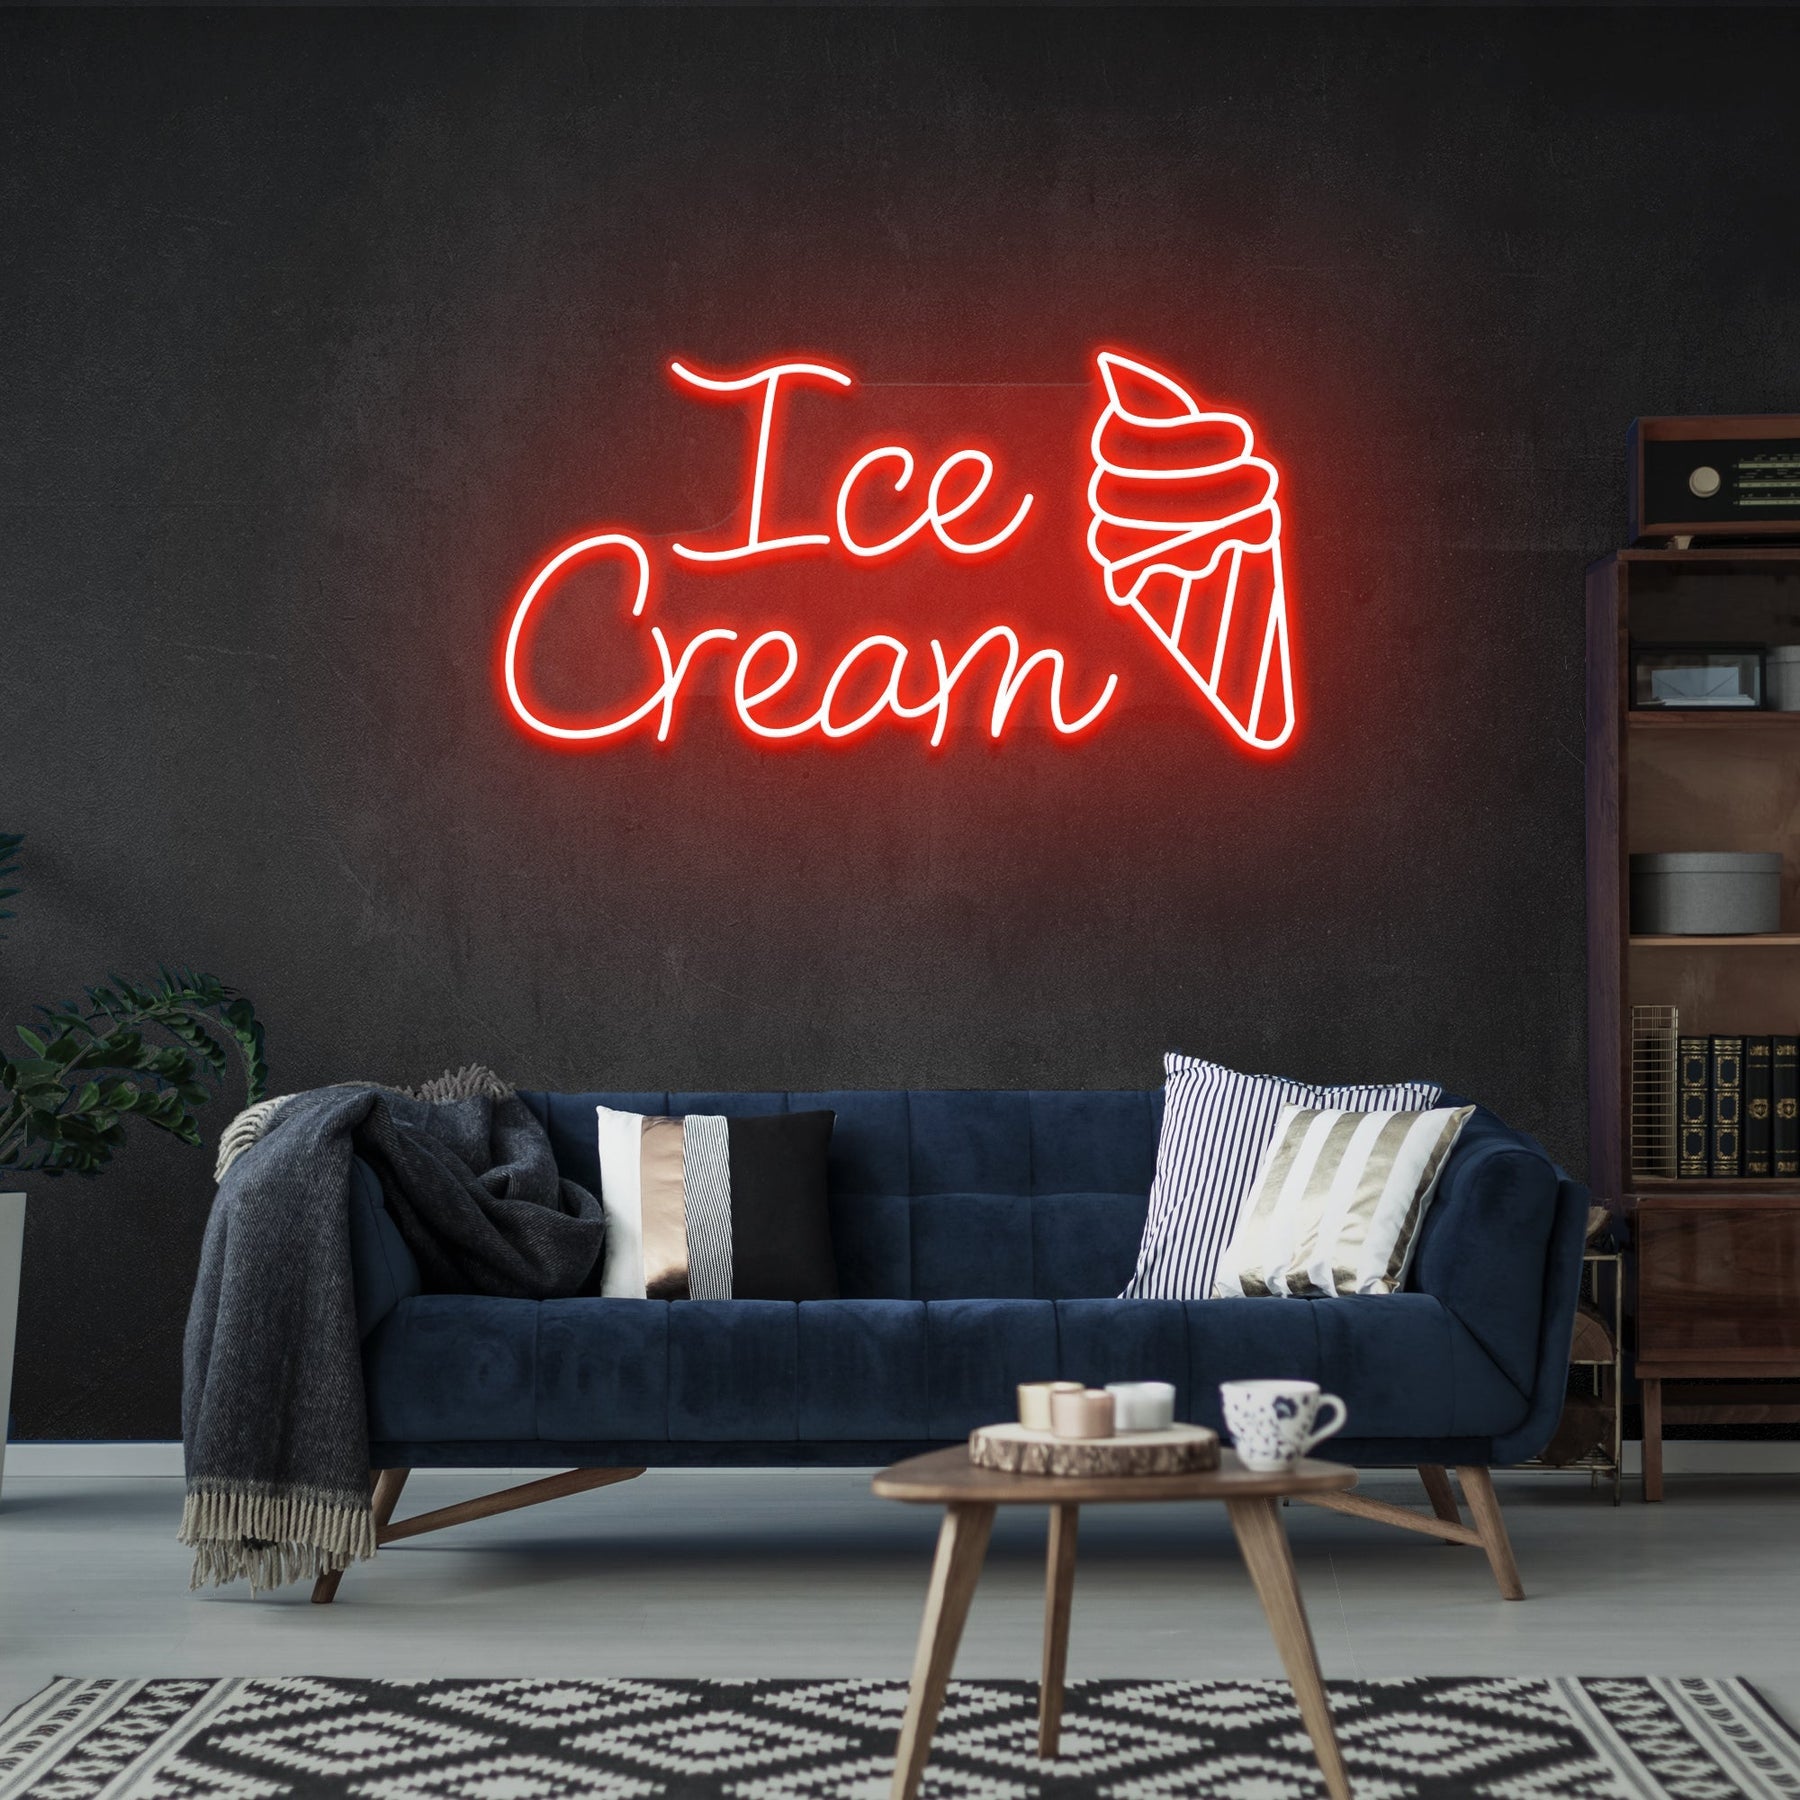 Ice Cream Led Neon Sign Light